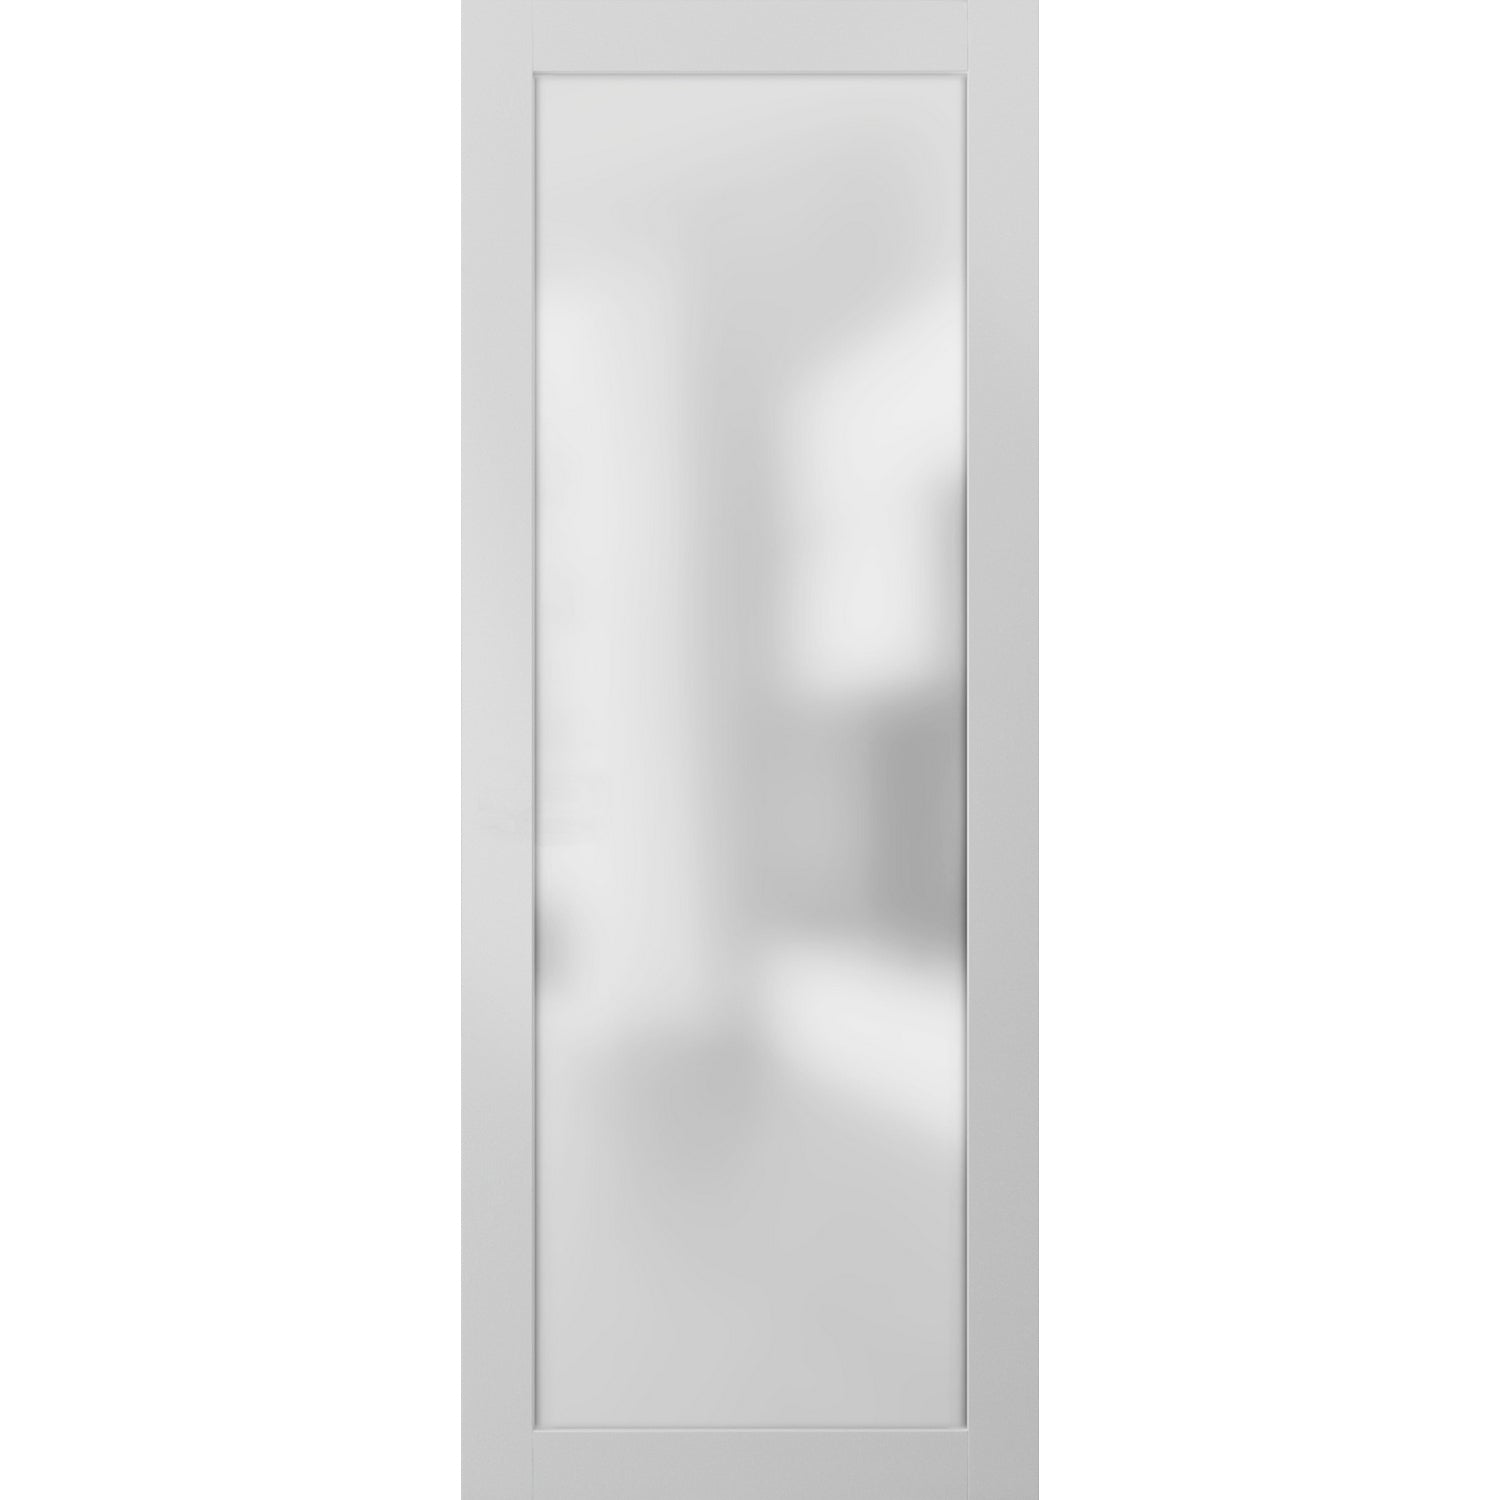 SARTODOORS Glass Door Panel Slab 28 x 80 | Planum 2102 White Silk | Use as Barn Pocket Sliding | Wood Door